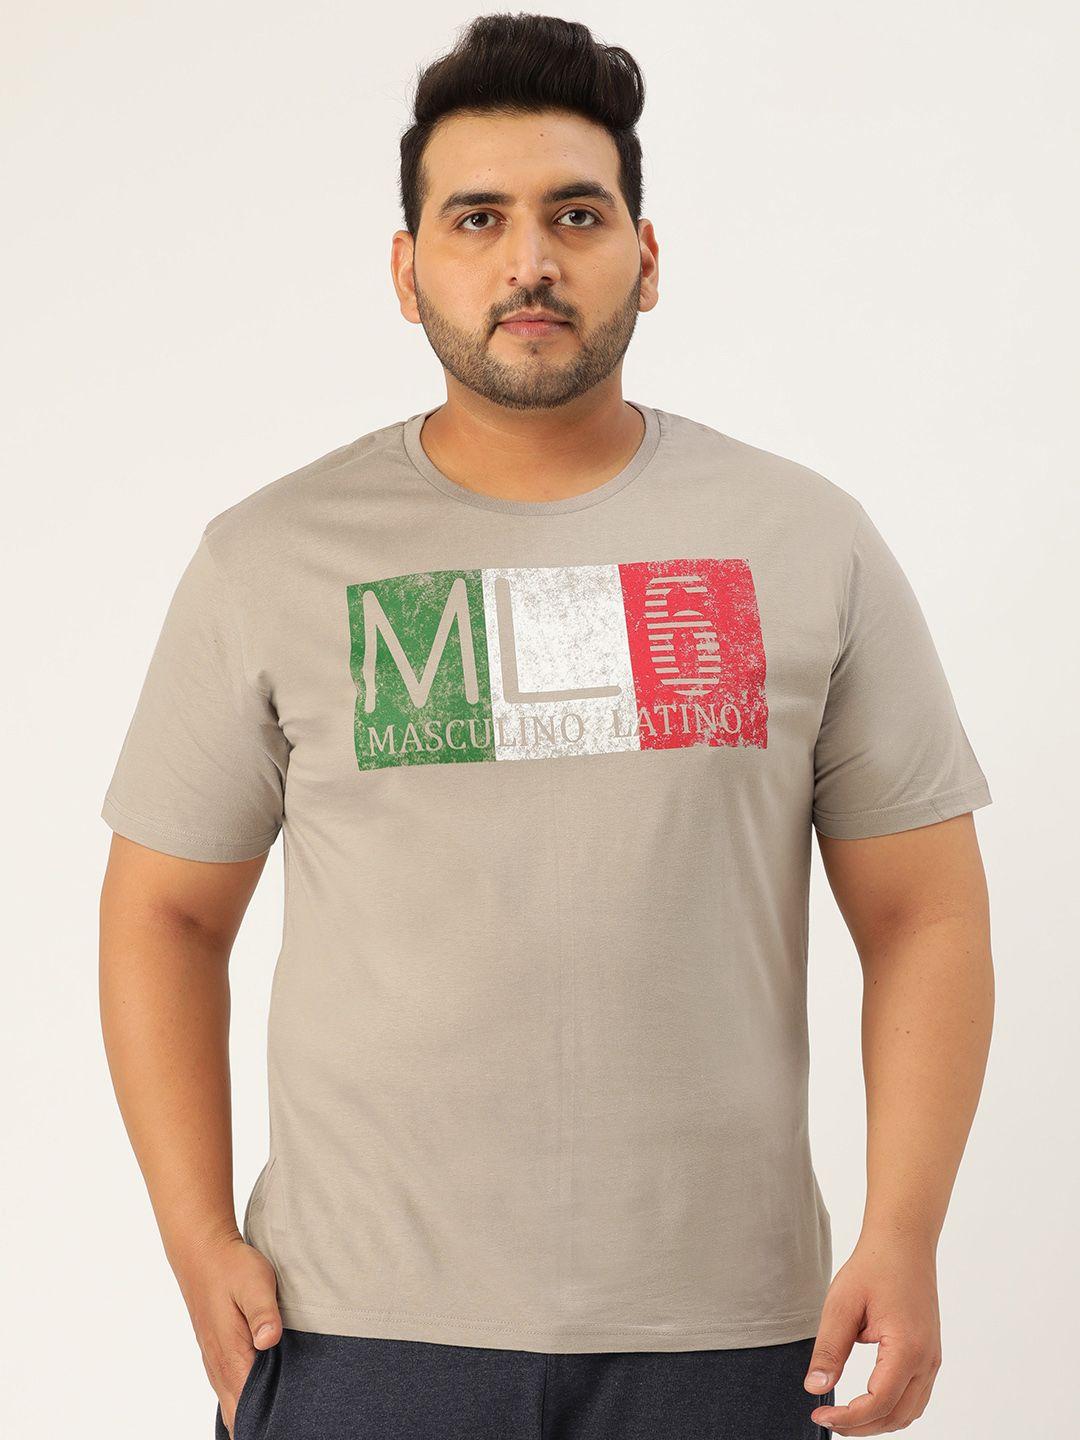 masculino latino men taupe printed round neck sports t-shirt